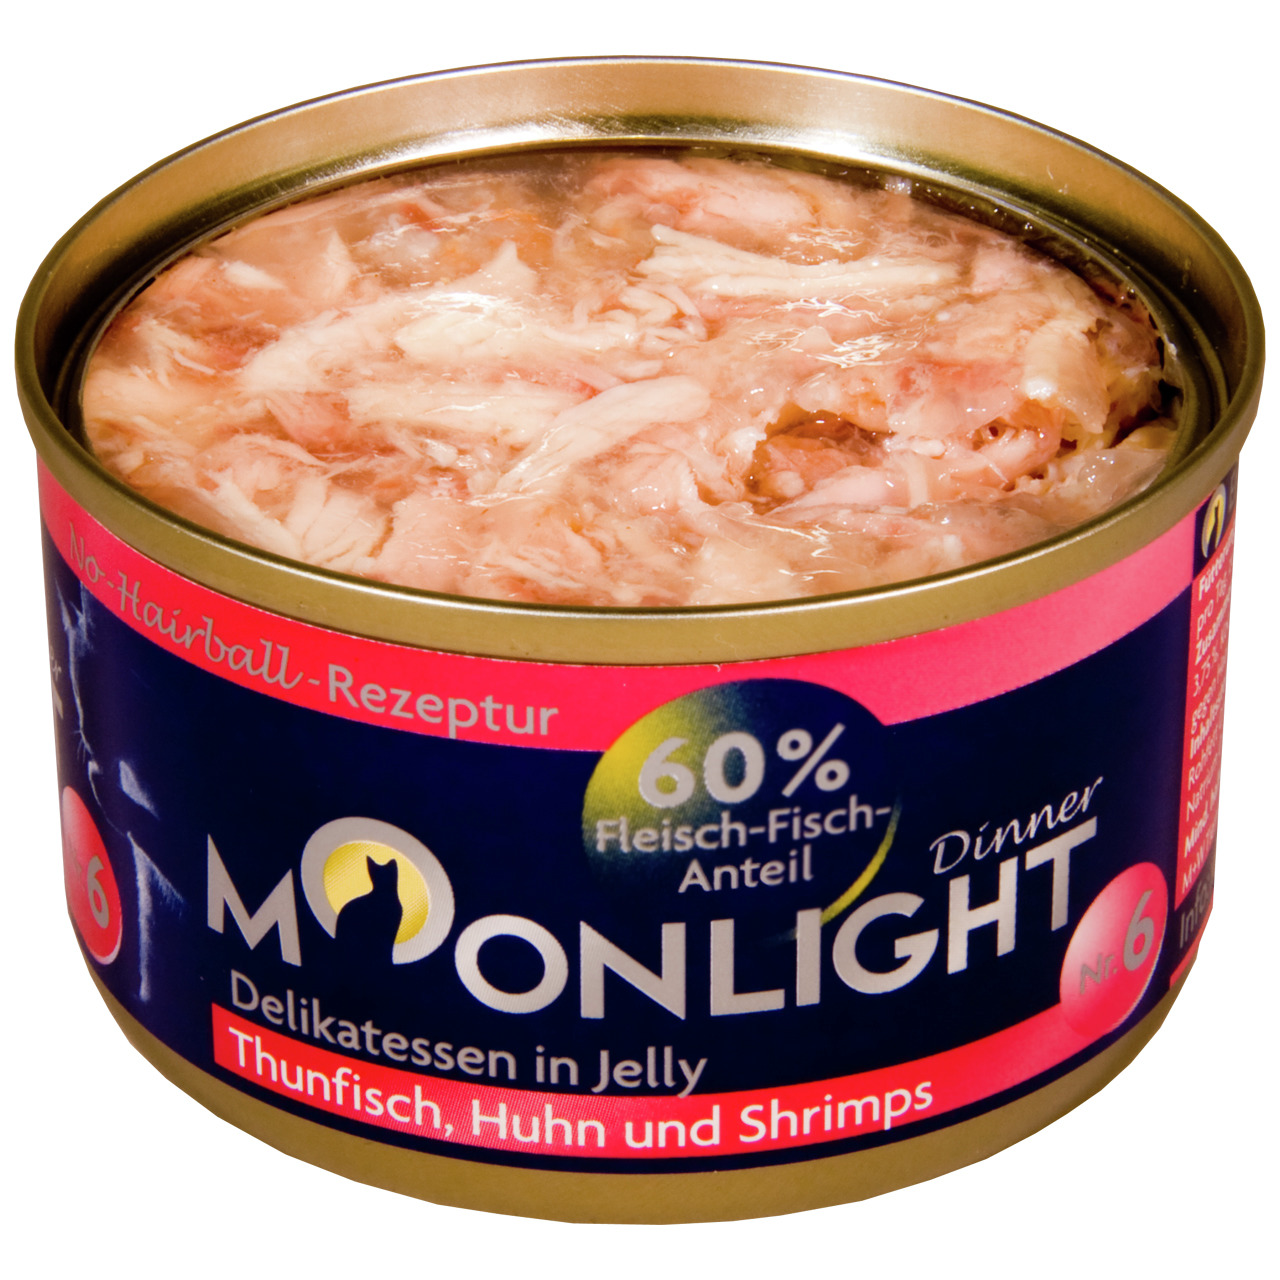 Moonlight Dinner Nr. 6 Thunfisch, Huhn und Shrimps in Jelly Katzen Nassfutter 80 g